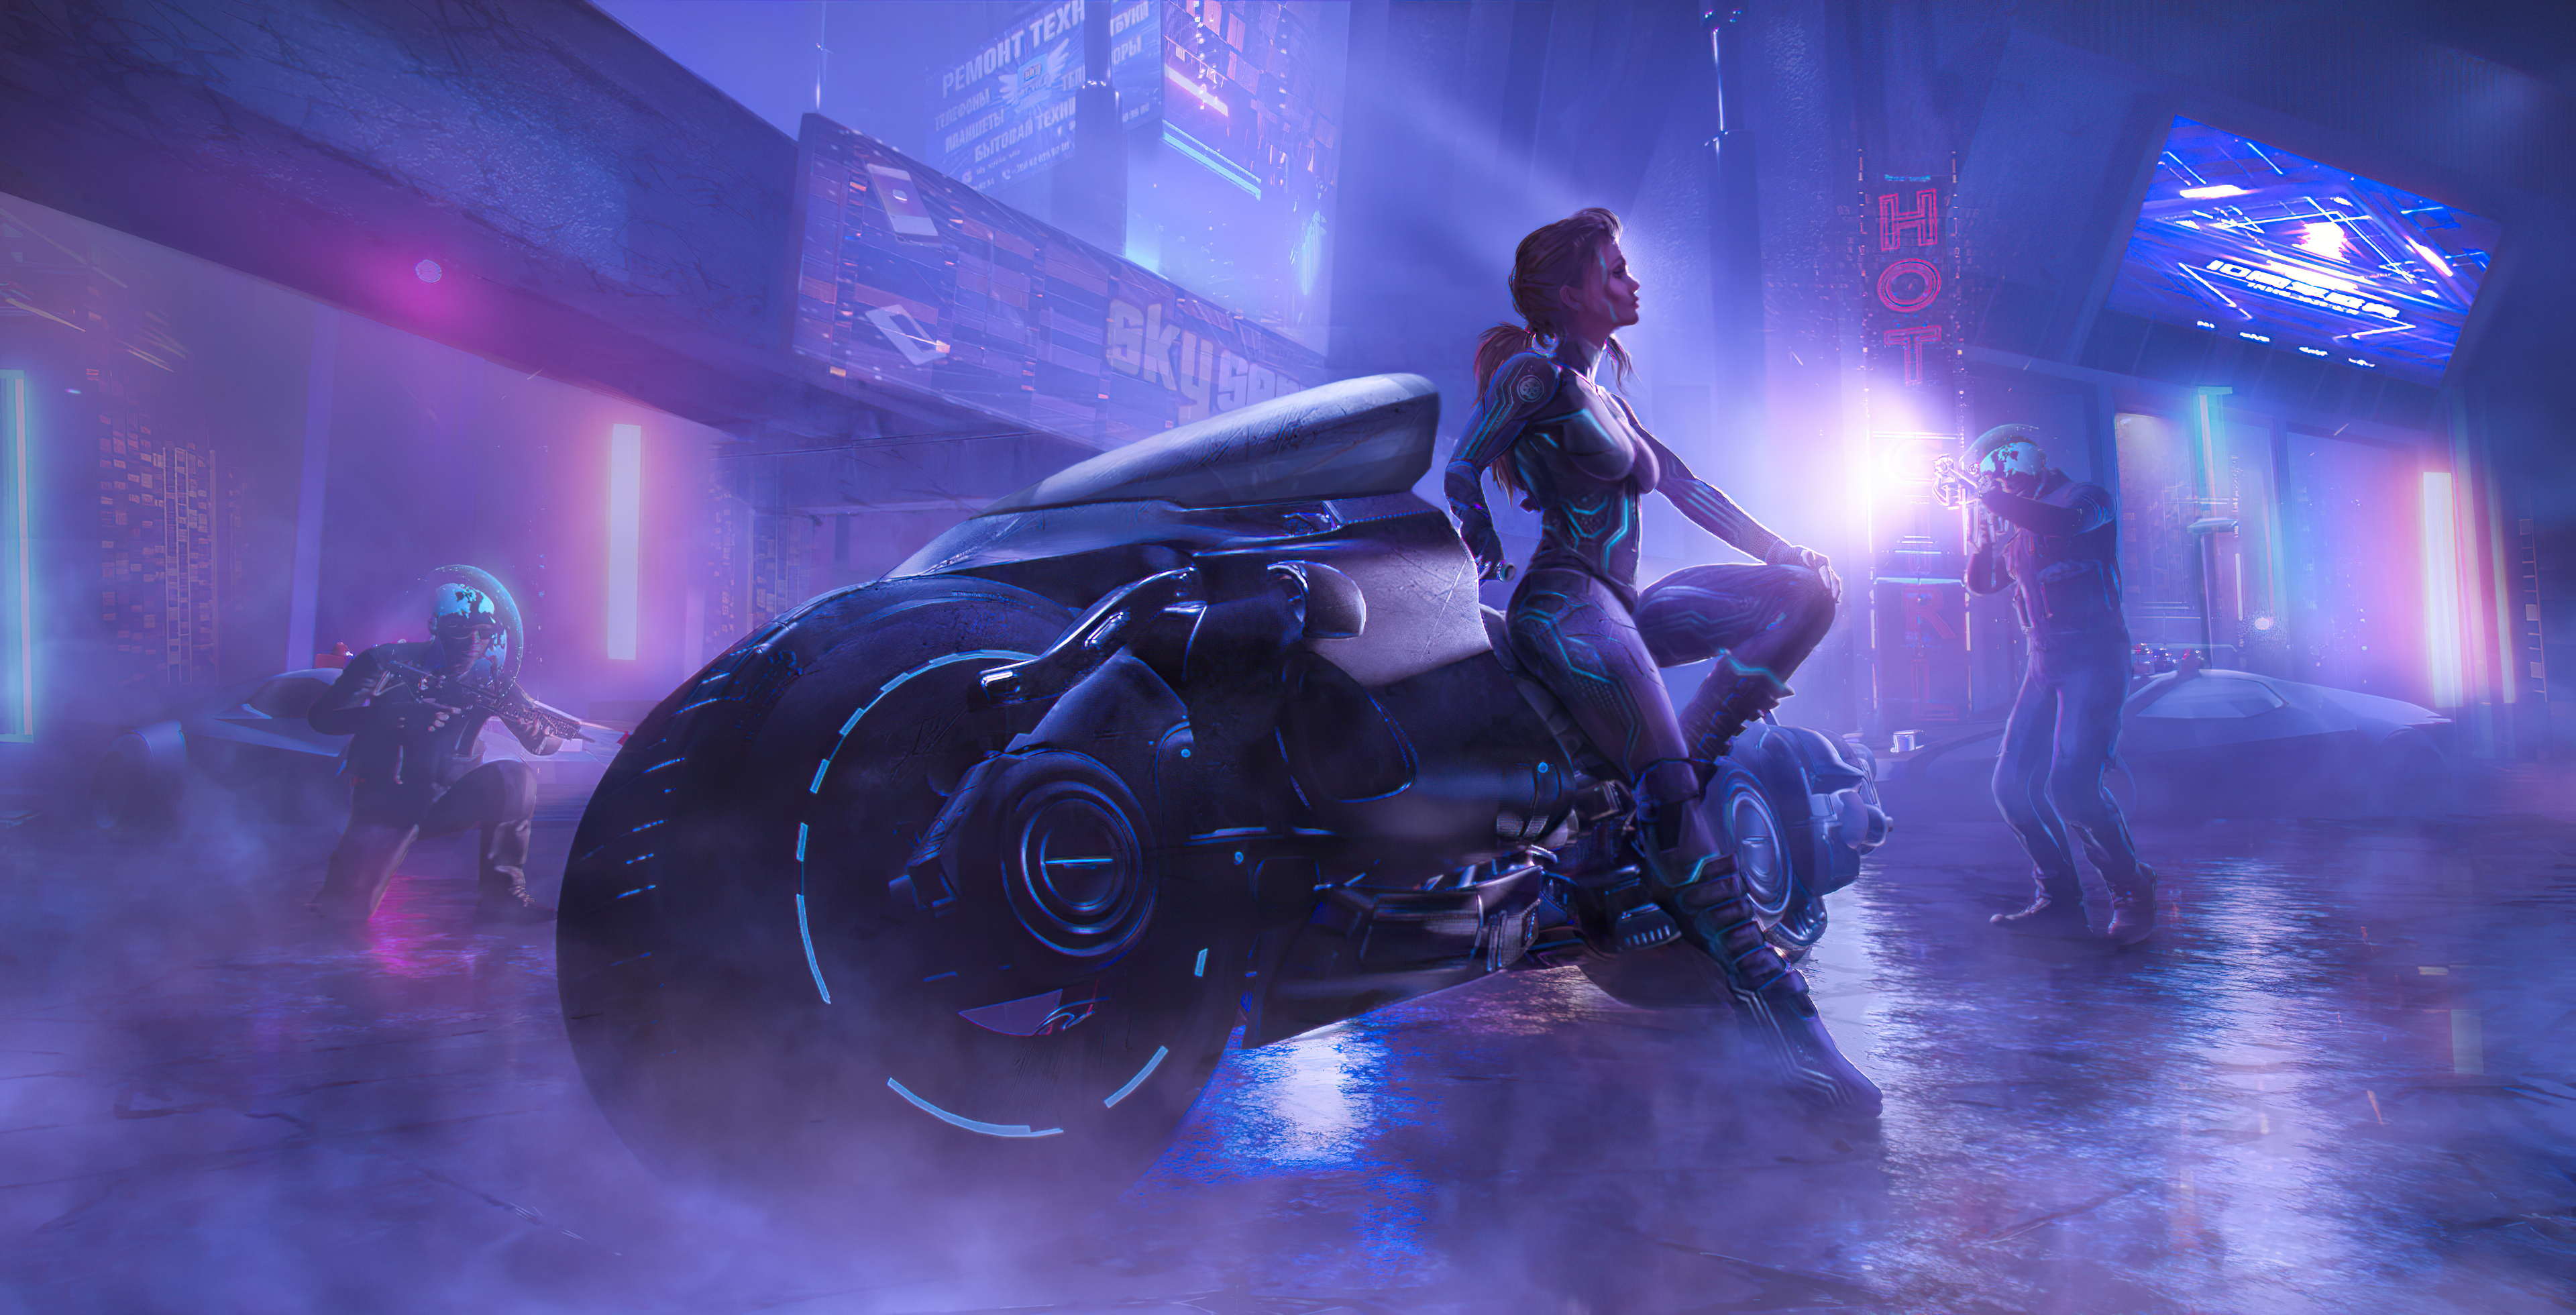 Cyberpunk, Futuristic, Girl, Motorcycle Wallpaper & Background Image